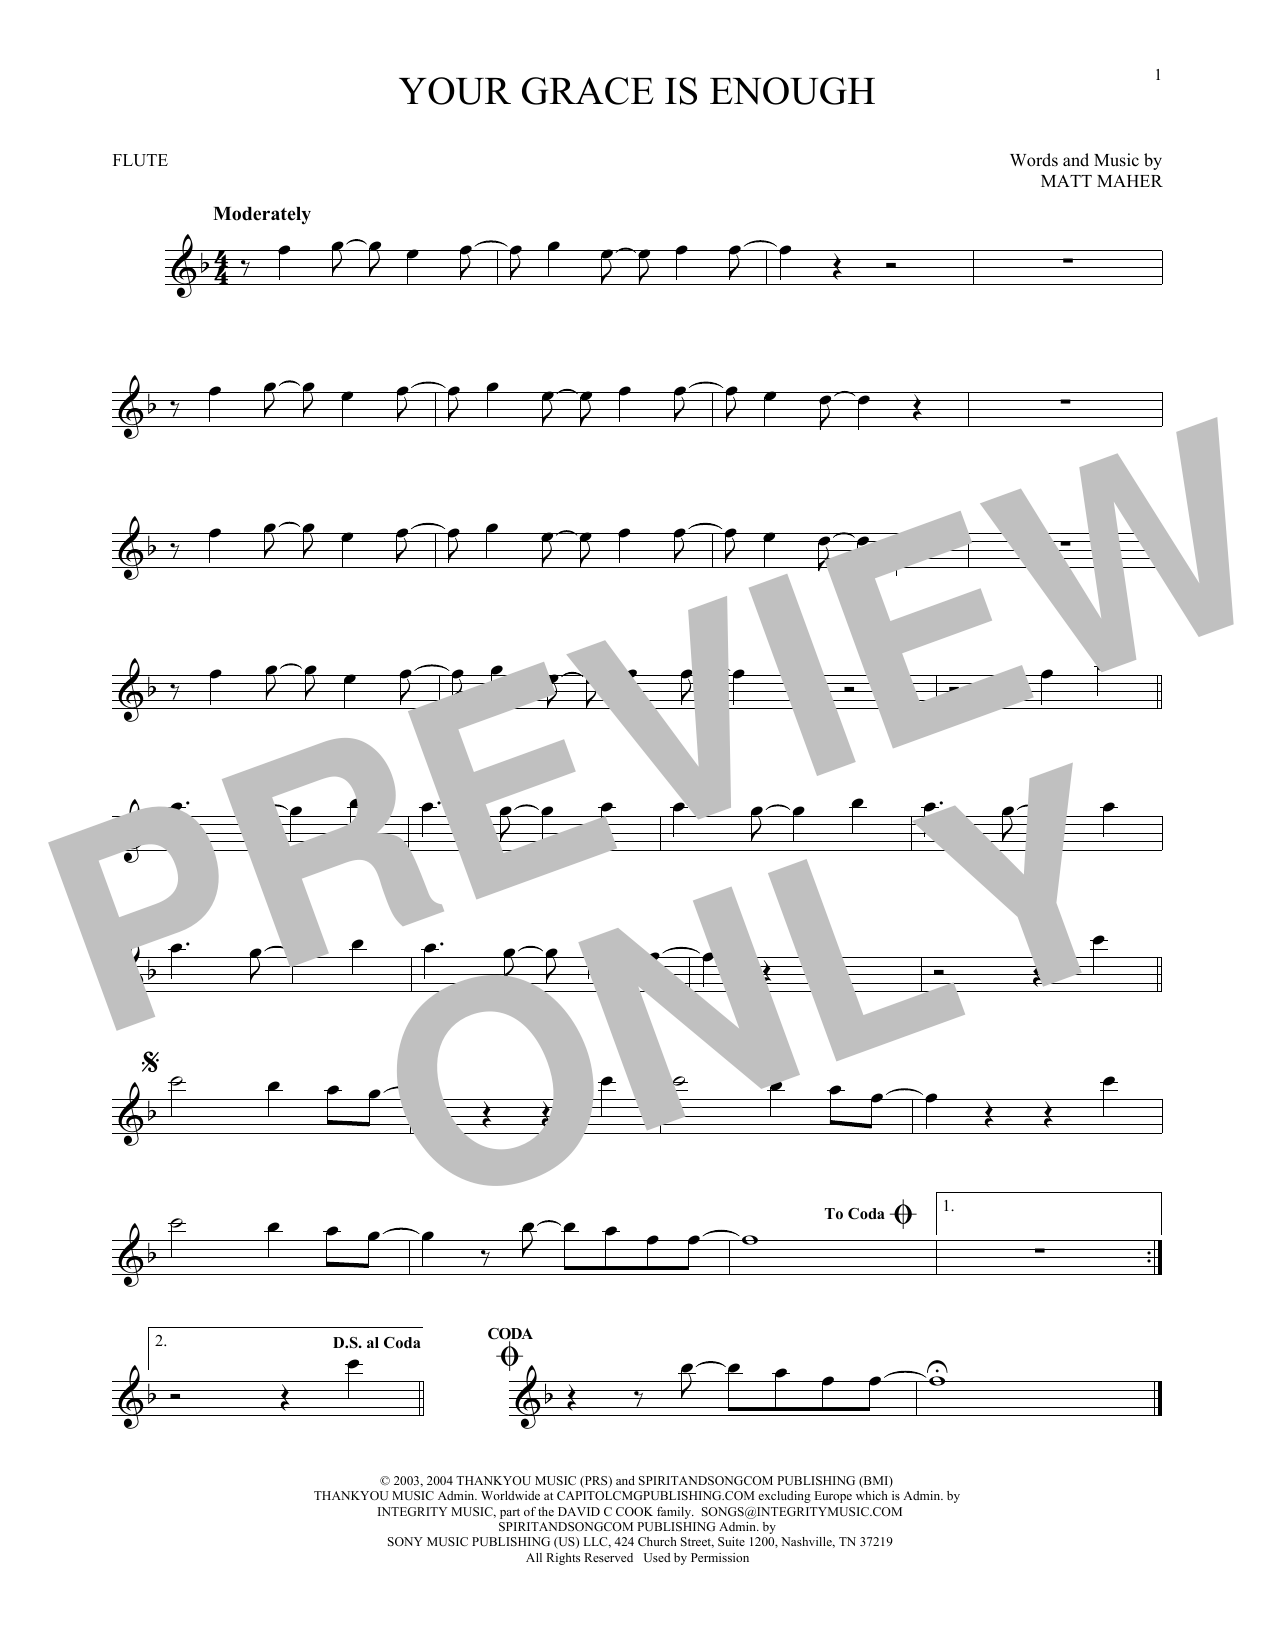 Chris Tomlin Your Grace Is Enough sheet music notes printable PDF score